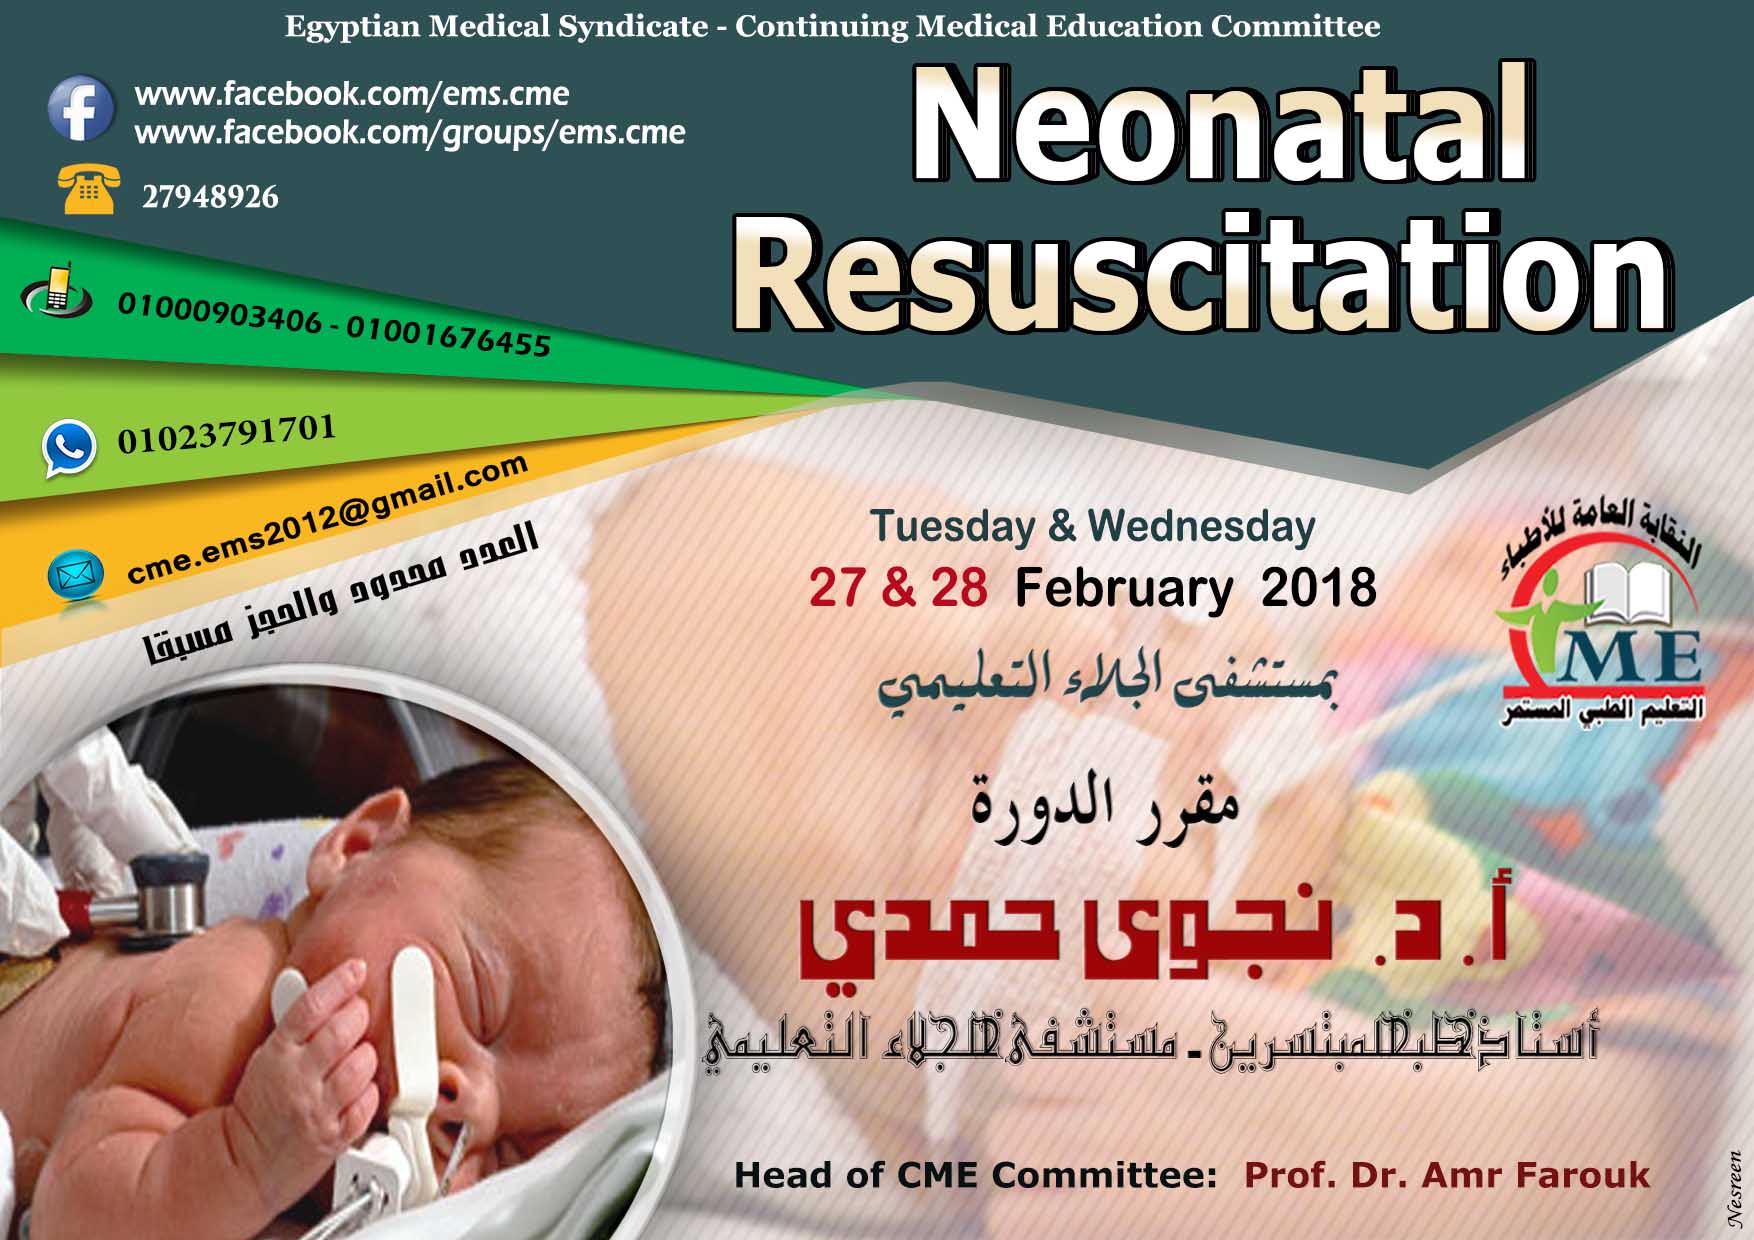 Neonatal Resuscitation Course